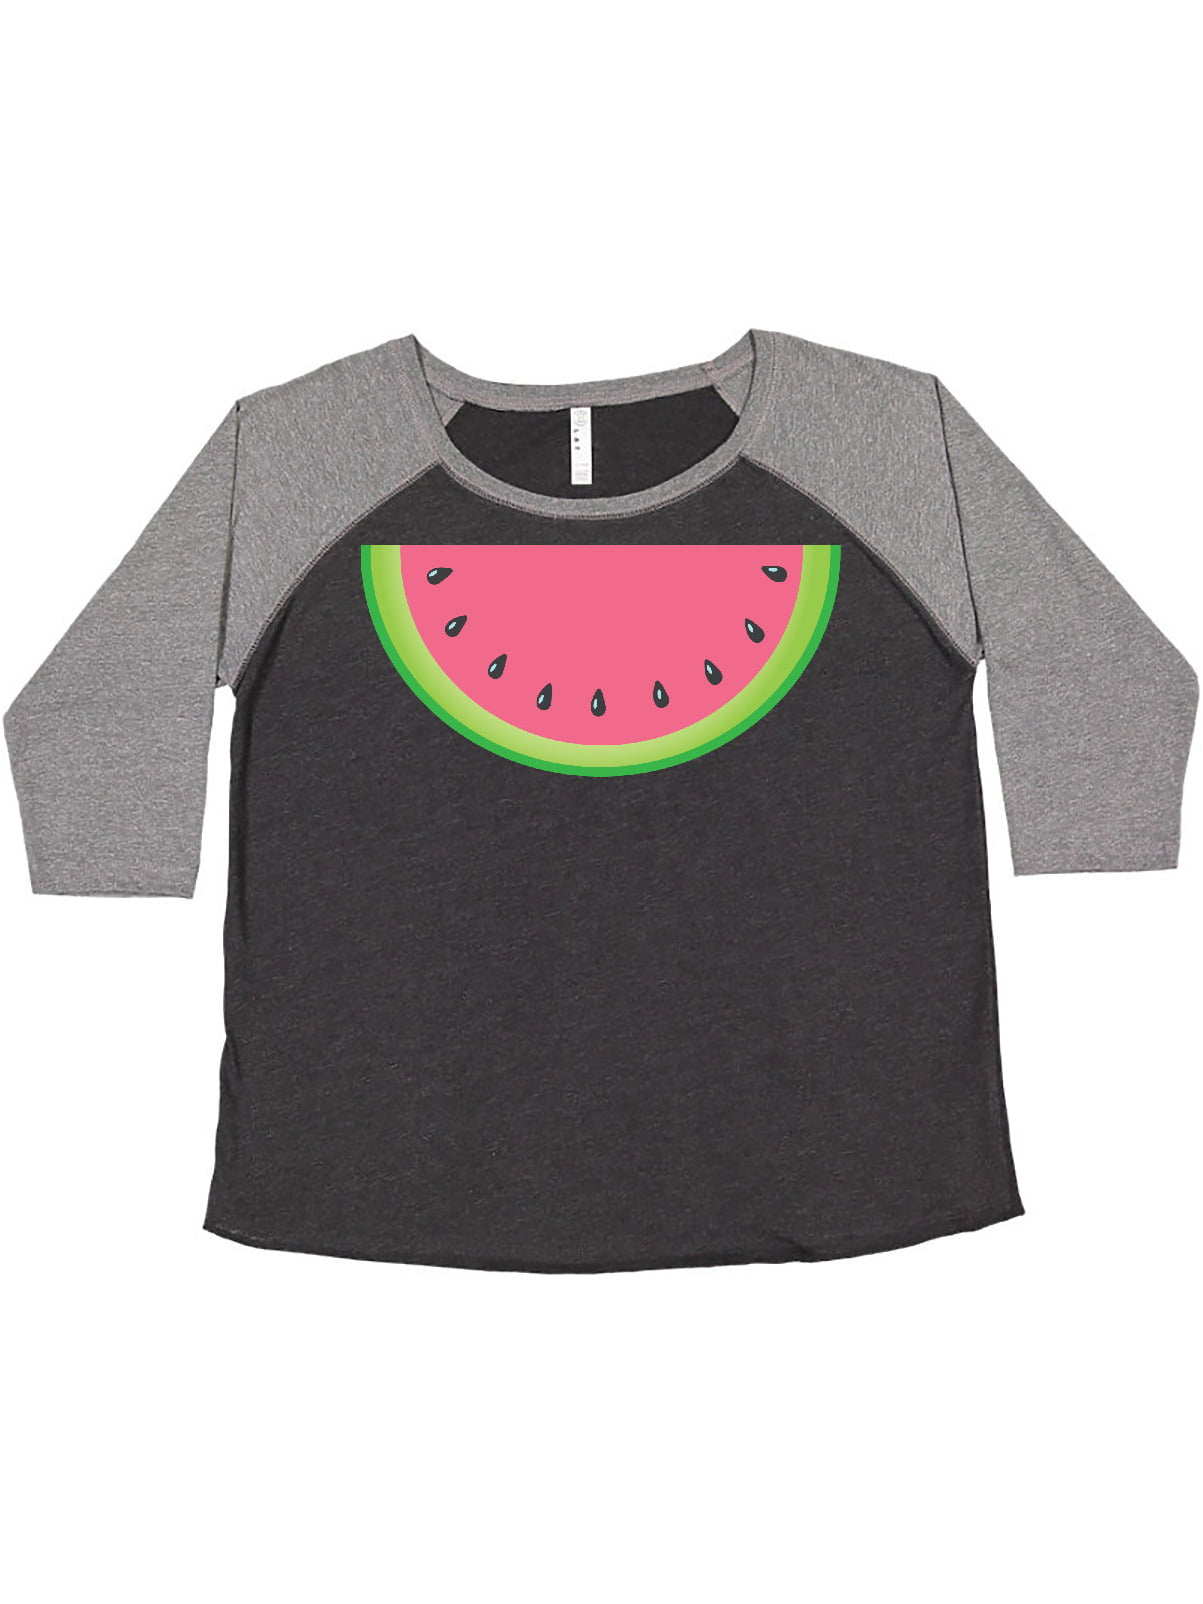 Women Print Tees,Watermelon,Vibrant Color Slices S-XXL O Neck T Shirt Female Tee